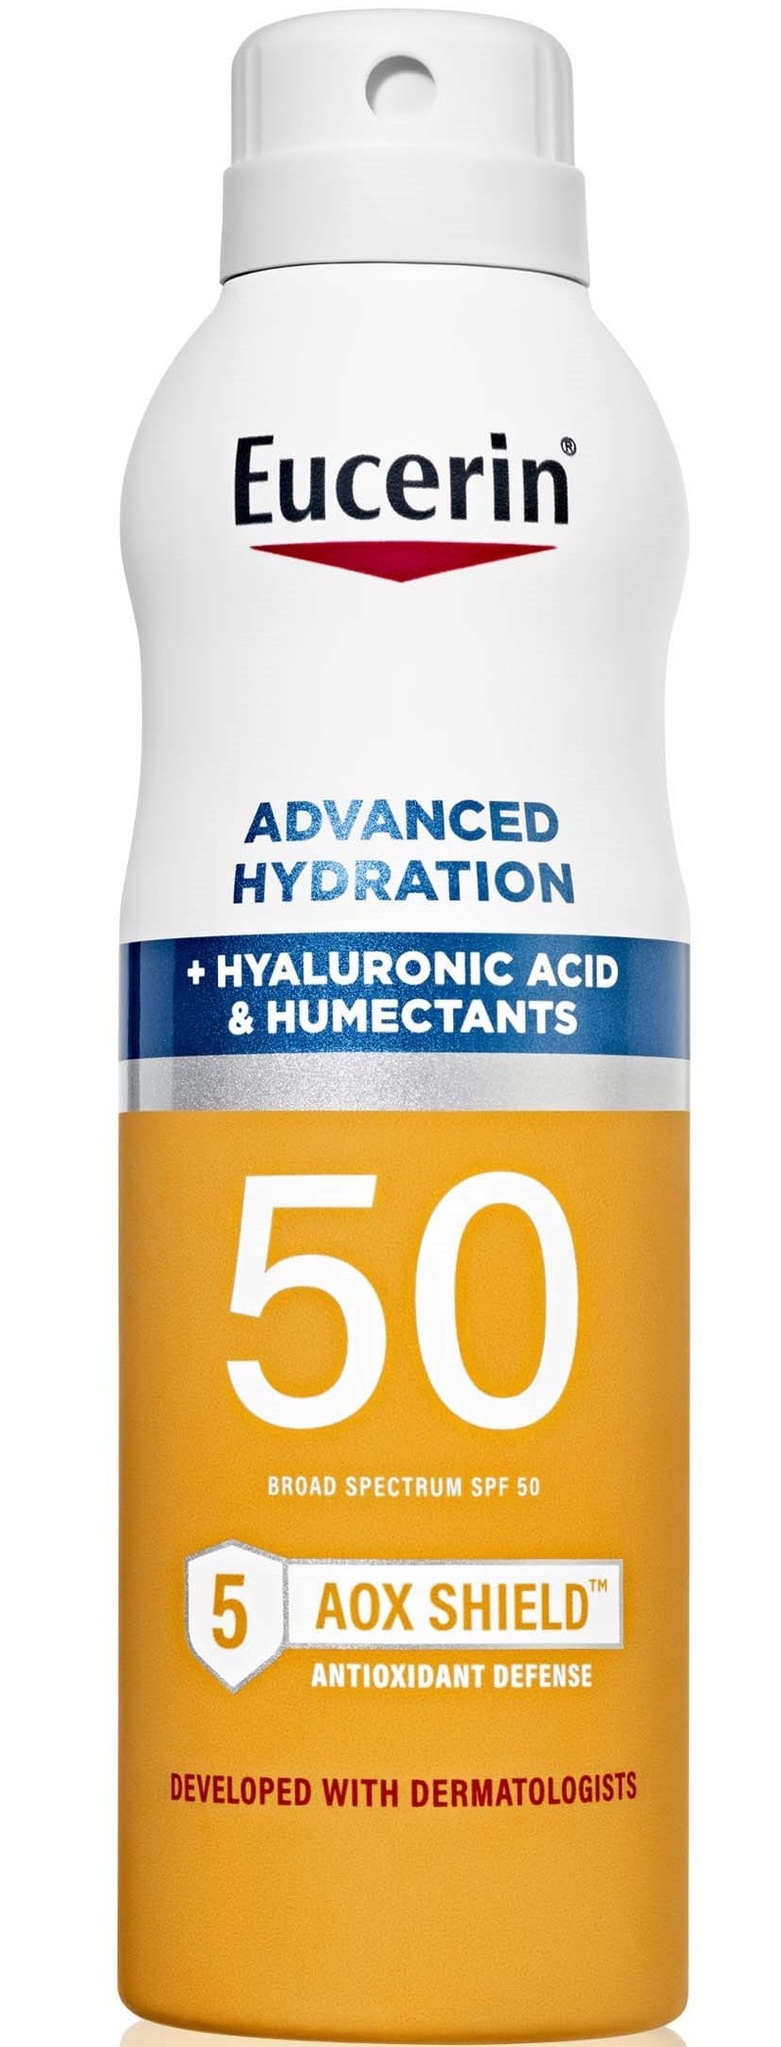 Eucerin Advanced Hydration SPF 50 Sunscreen Spray